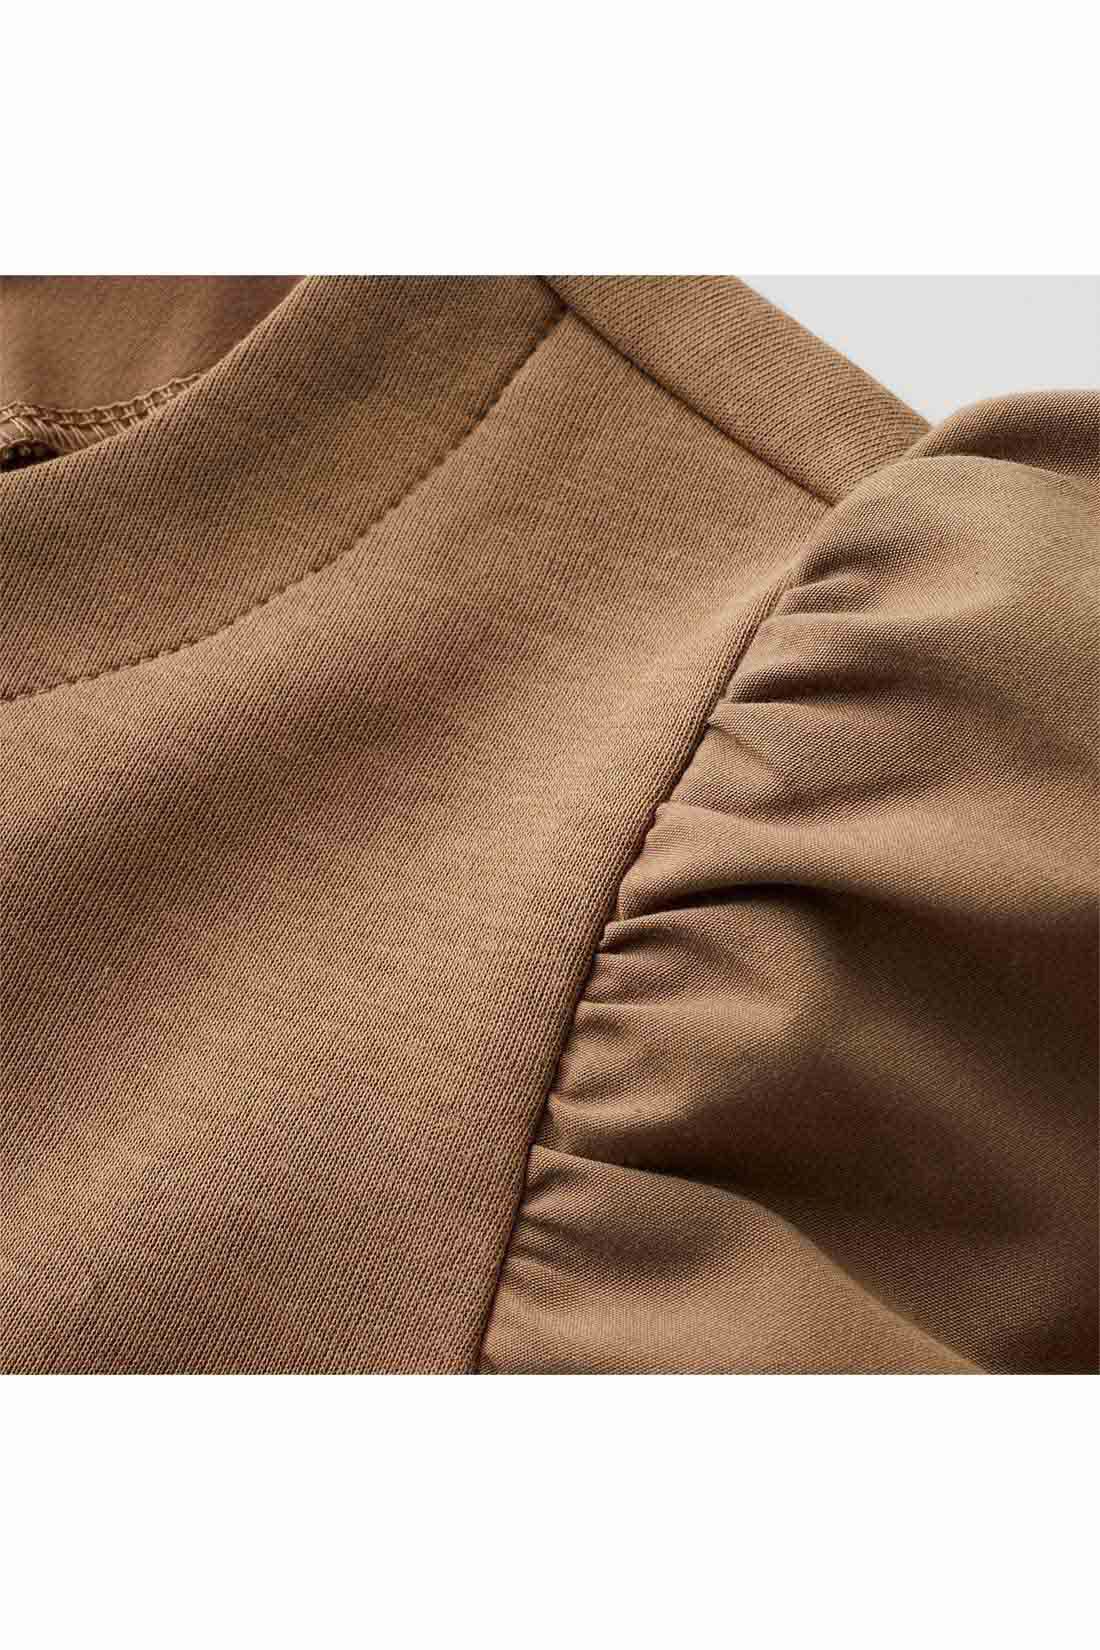 IEDIT|IEDIT[イディット]　ふんわり袖デザインが華やかな 異素材切り替えプルオーバー〈ブラック〉|袖は張り感のある布はく素材で軽やかに。身ごろはほどよく厚みがあり表面感のきれいなカットソー素材。